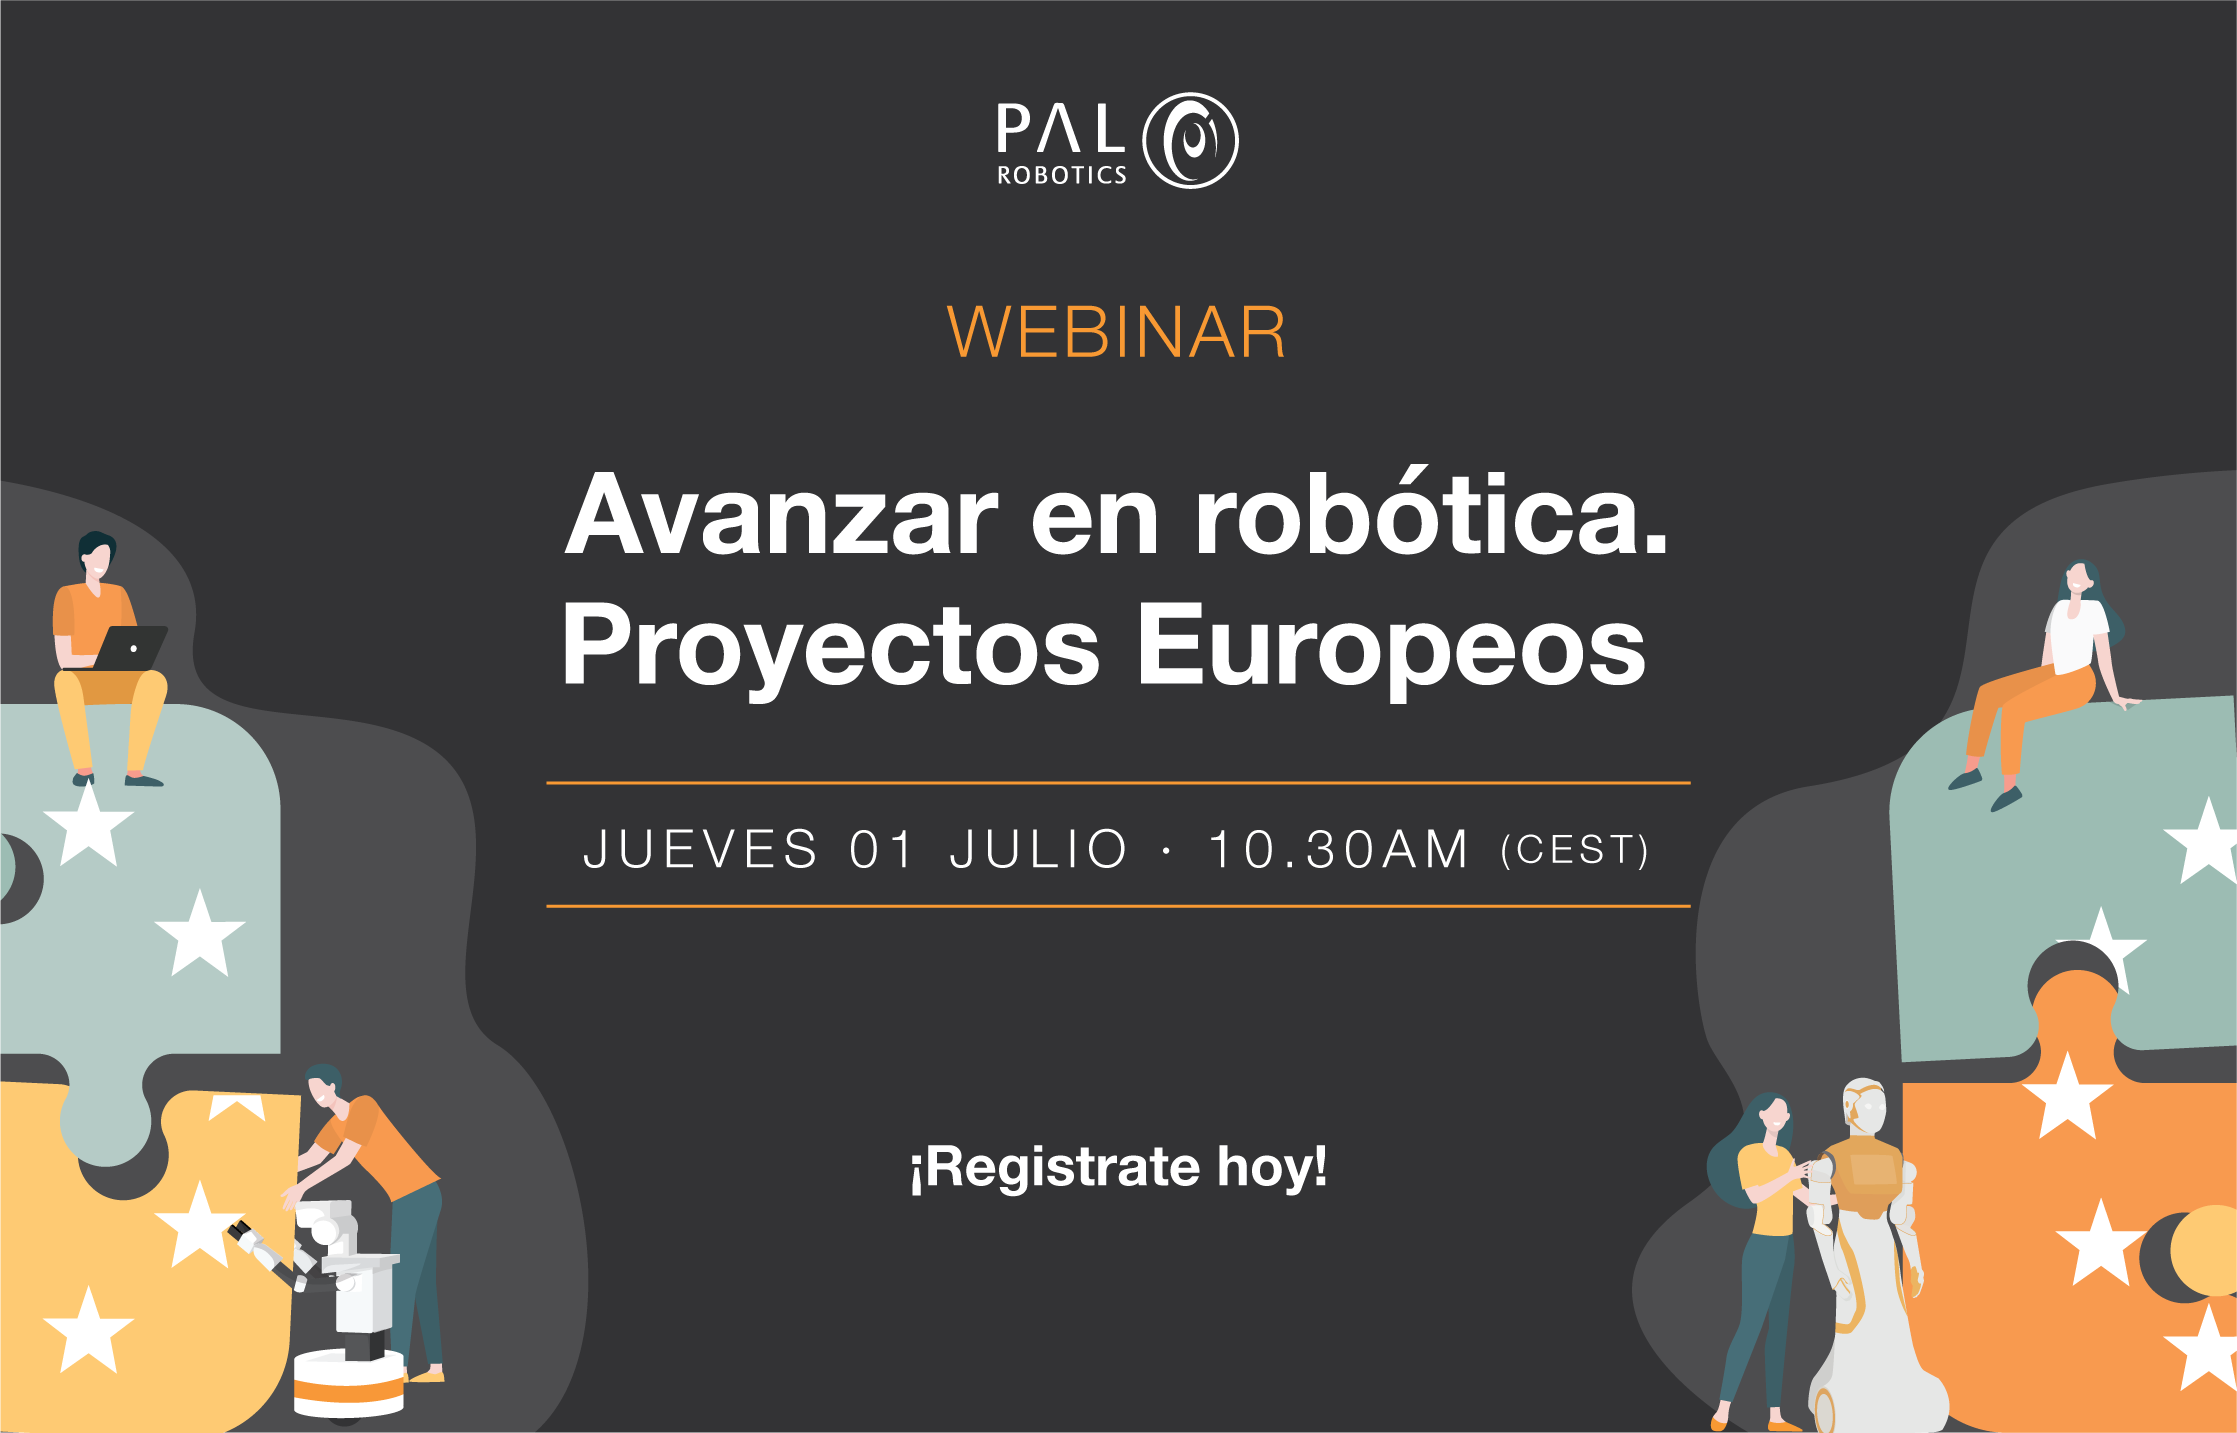 Advance Robotics through EU Project: a webinar by PAL Robotics on collaborative project with the European Union for robots and robotics.